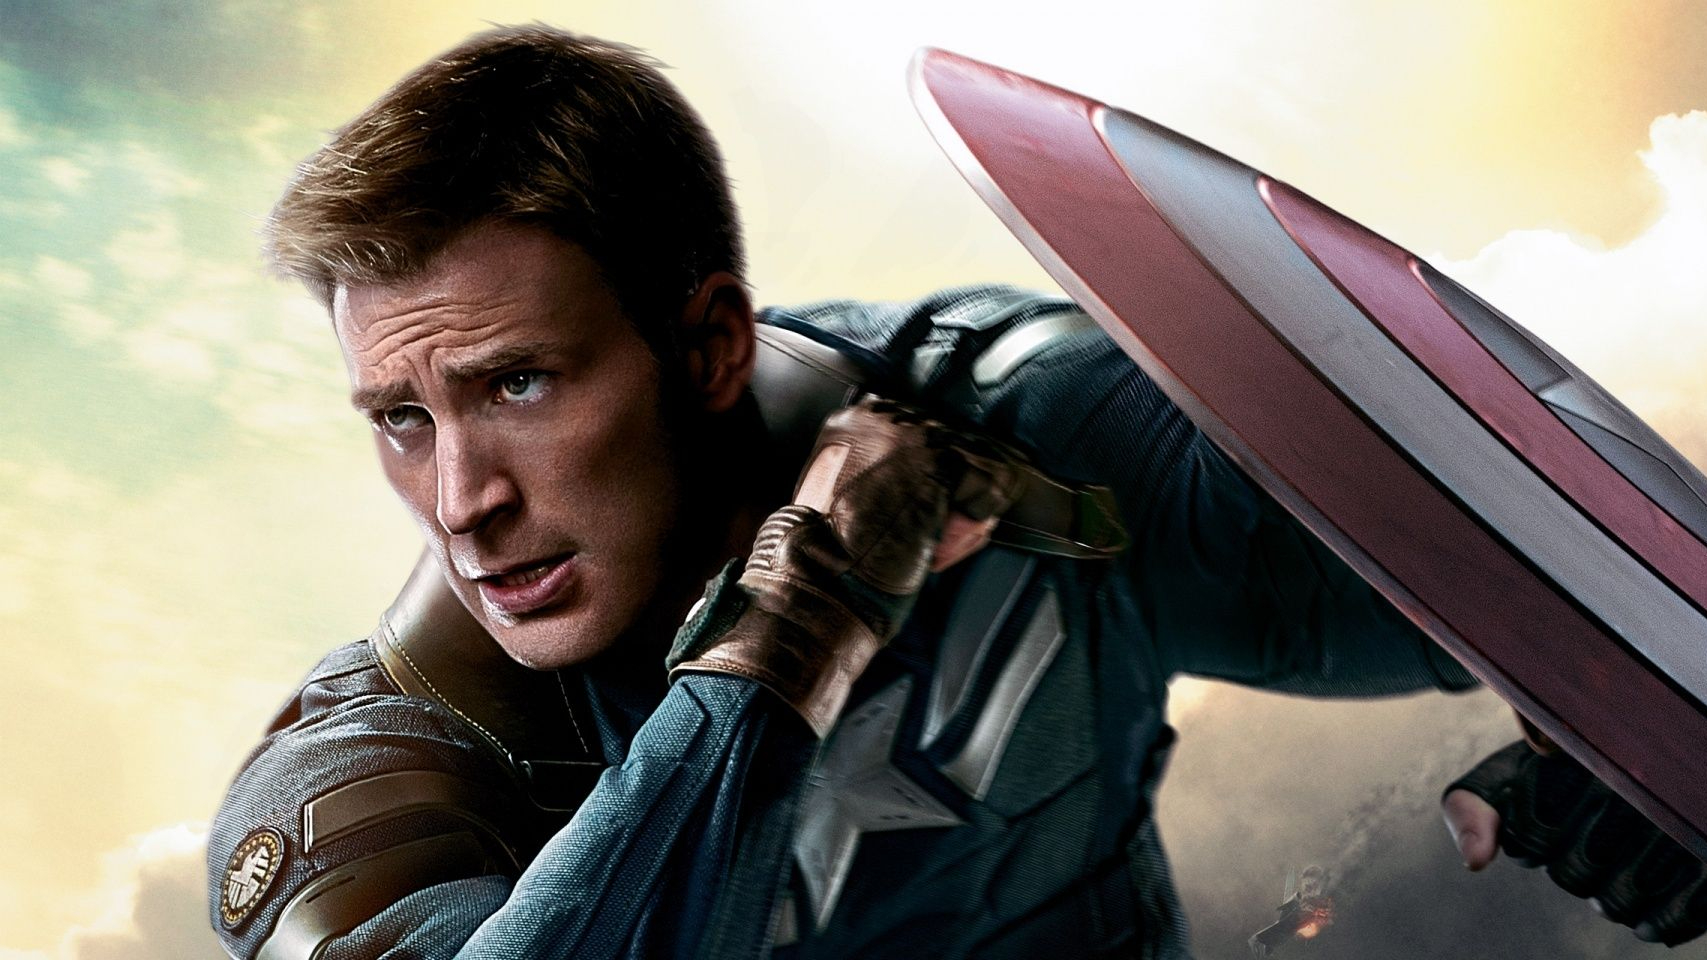 Chris Evans Is Being Erased As Captain America